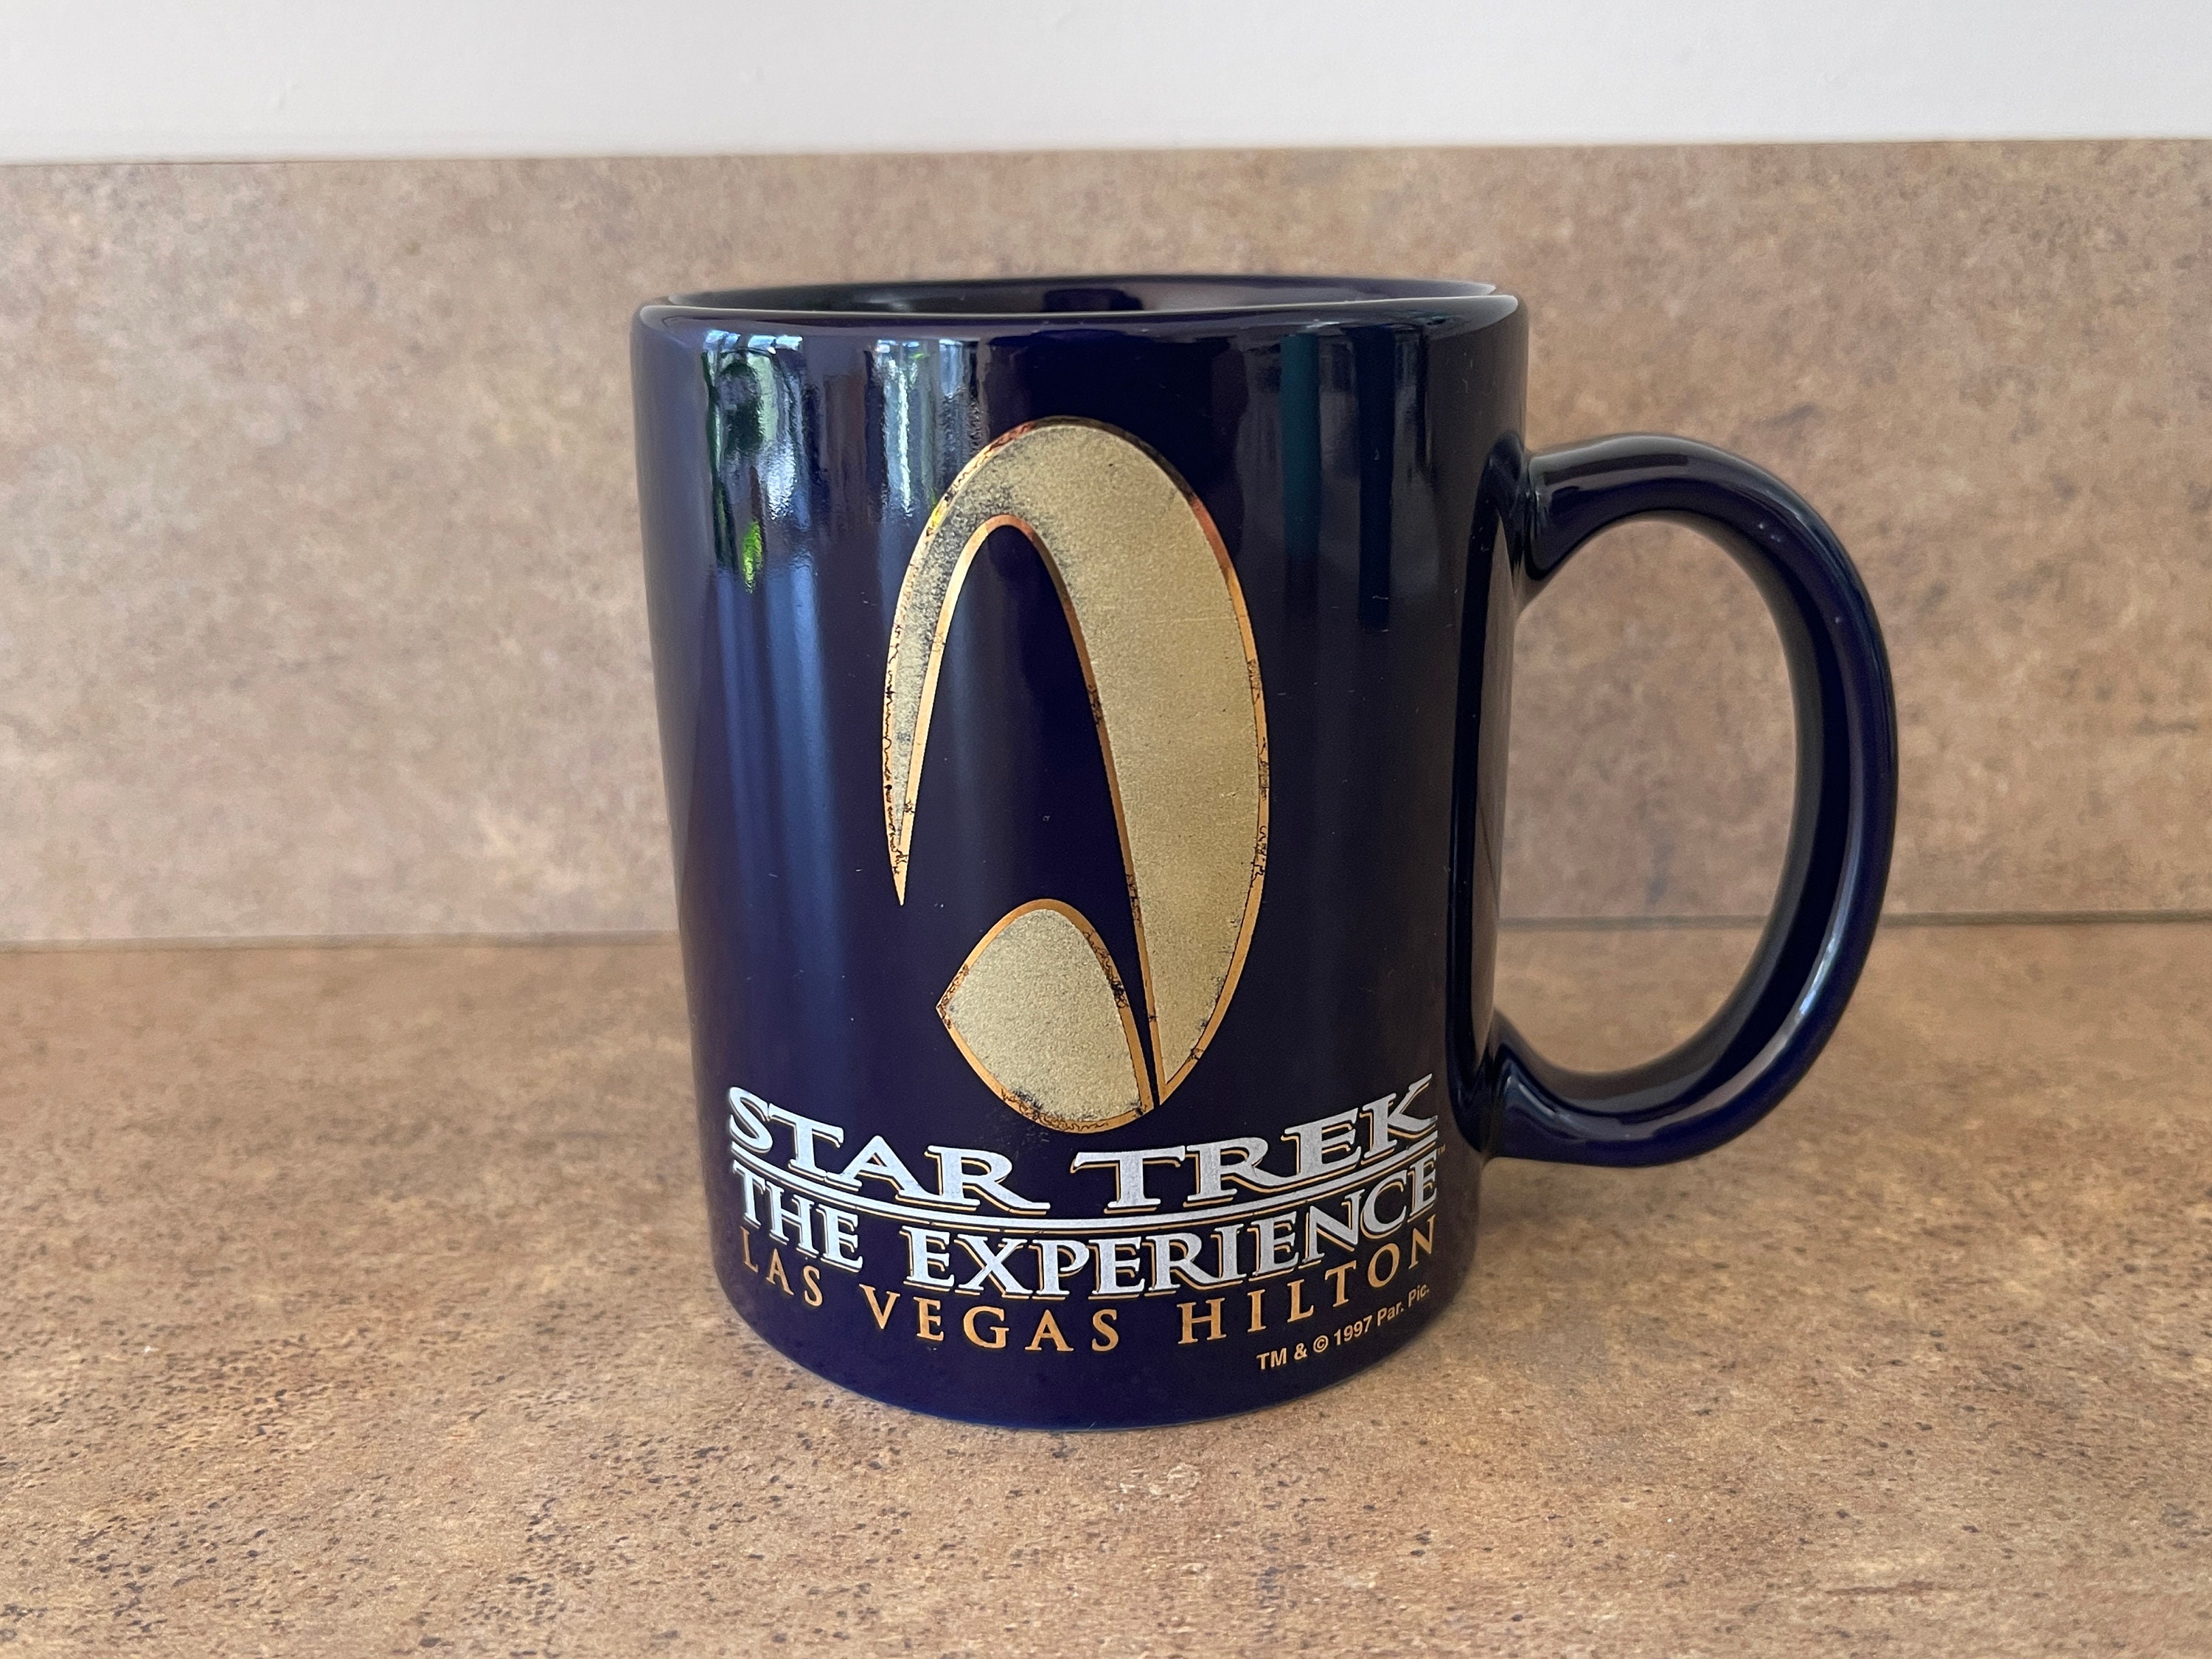 Vintage Star Trek The Experience Las Vegas Hilton 1997 Nevada Blue & Gold  Authentic Ceramic Coffee Mug TNG TOS Next Generation Original